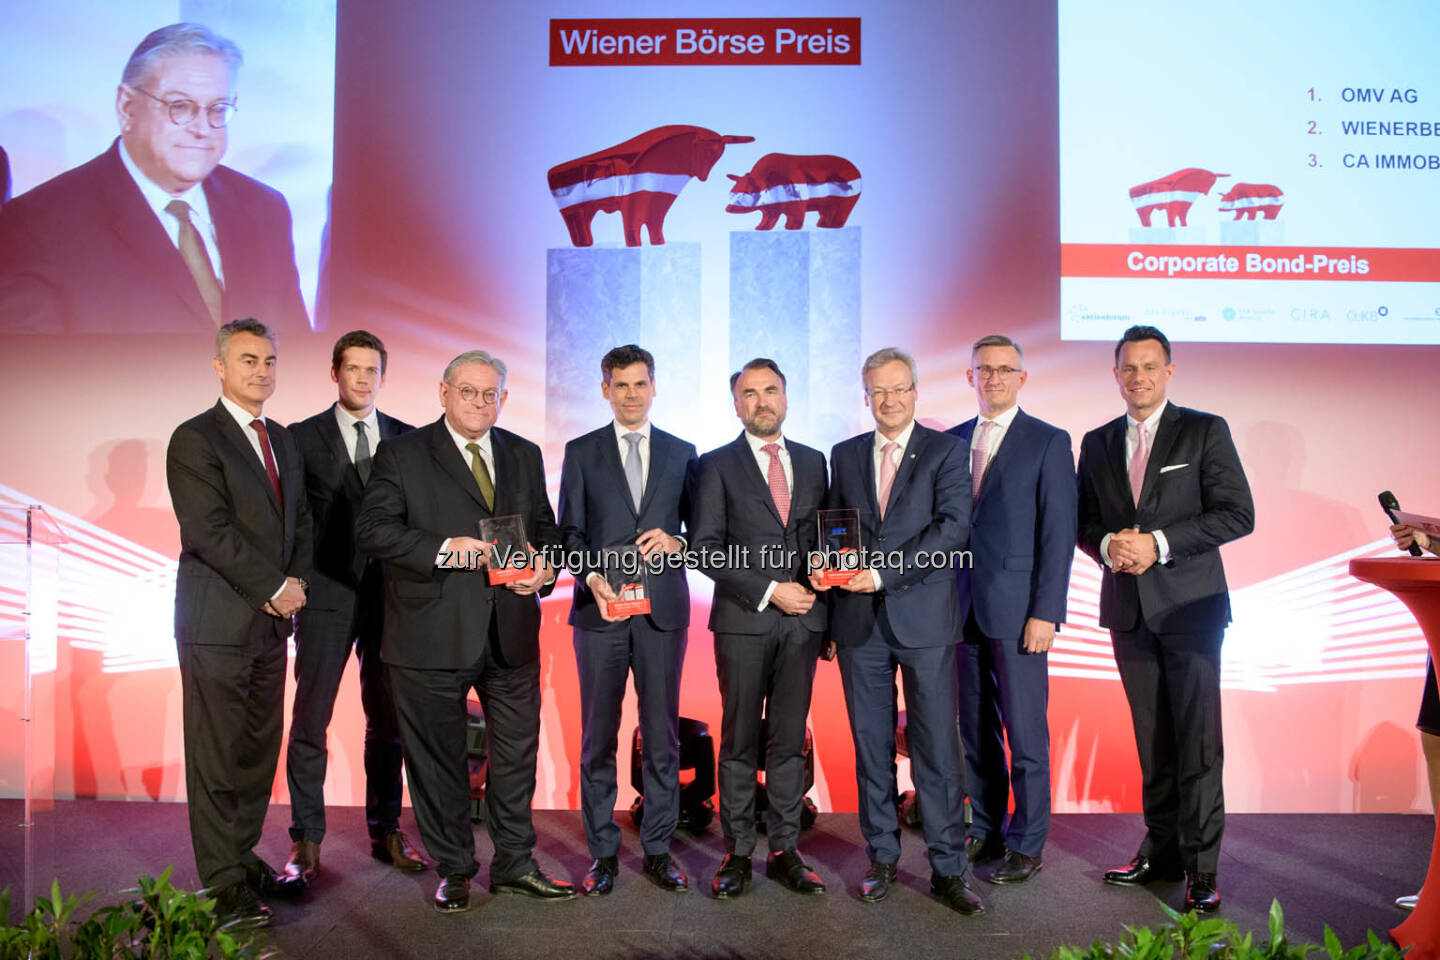 Corporate Bond-Preis: OMV, Wienerberger, CA Immo